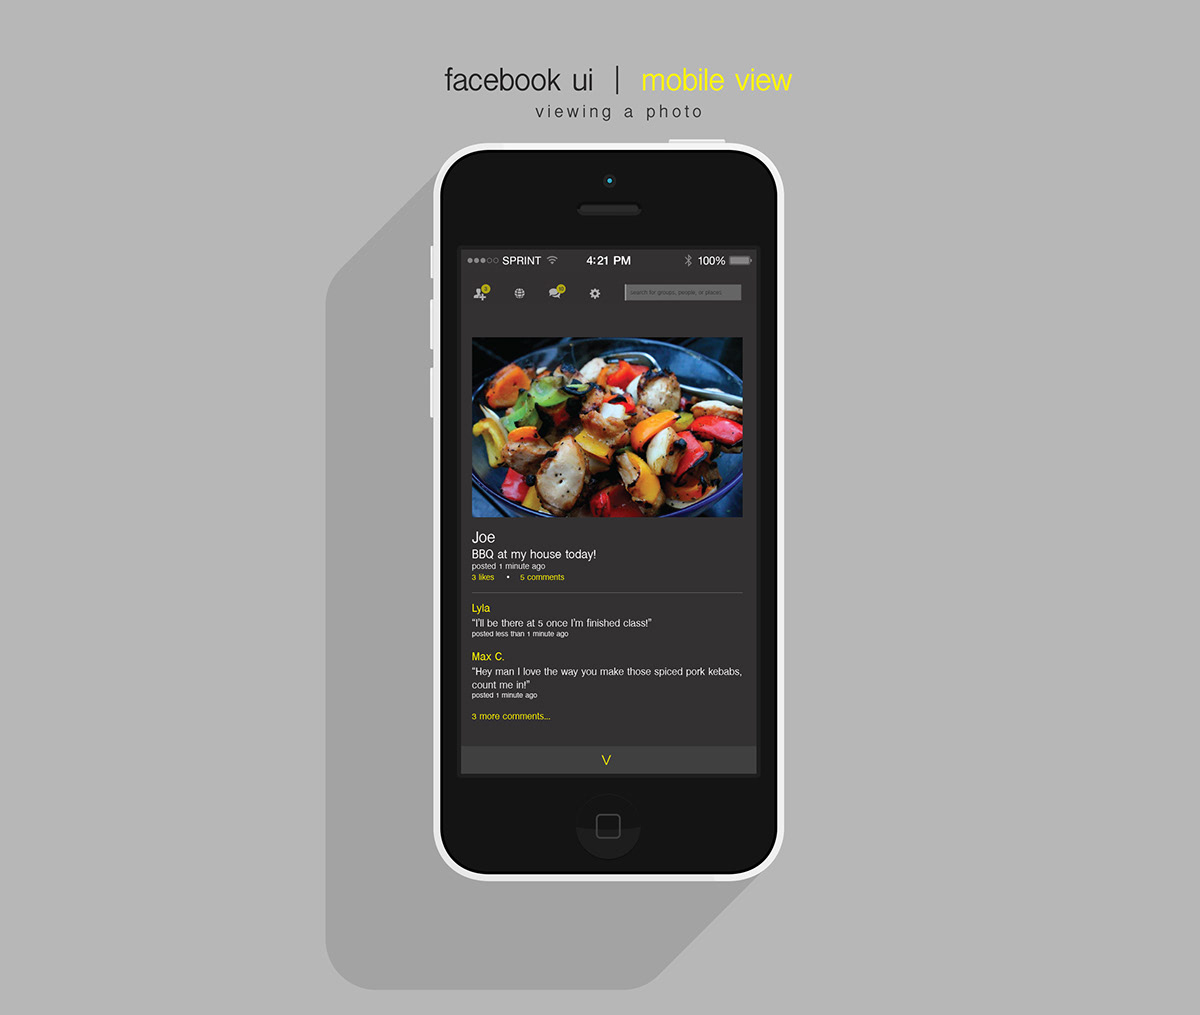 user Interface new revamped mobile UI facelift dark yellow